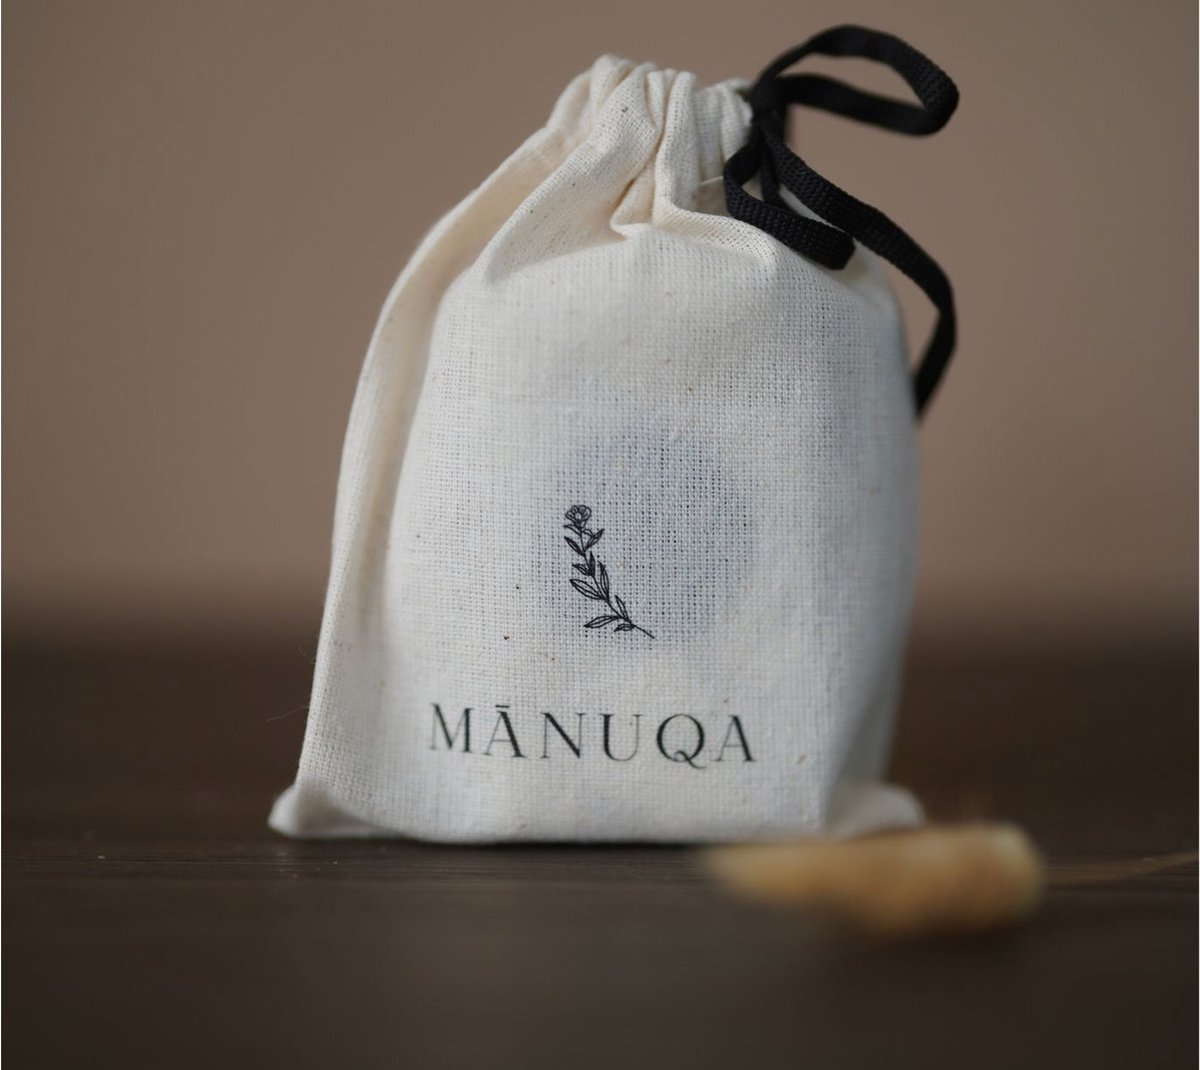 Soap Bar (100 gram) in a Cotton Gift Bag